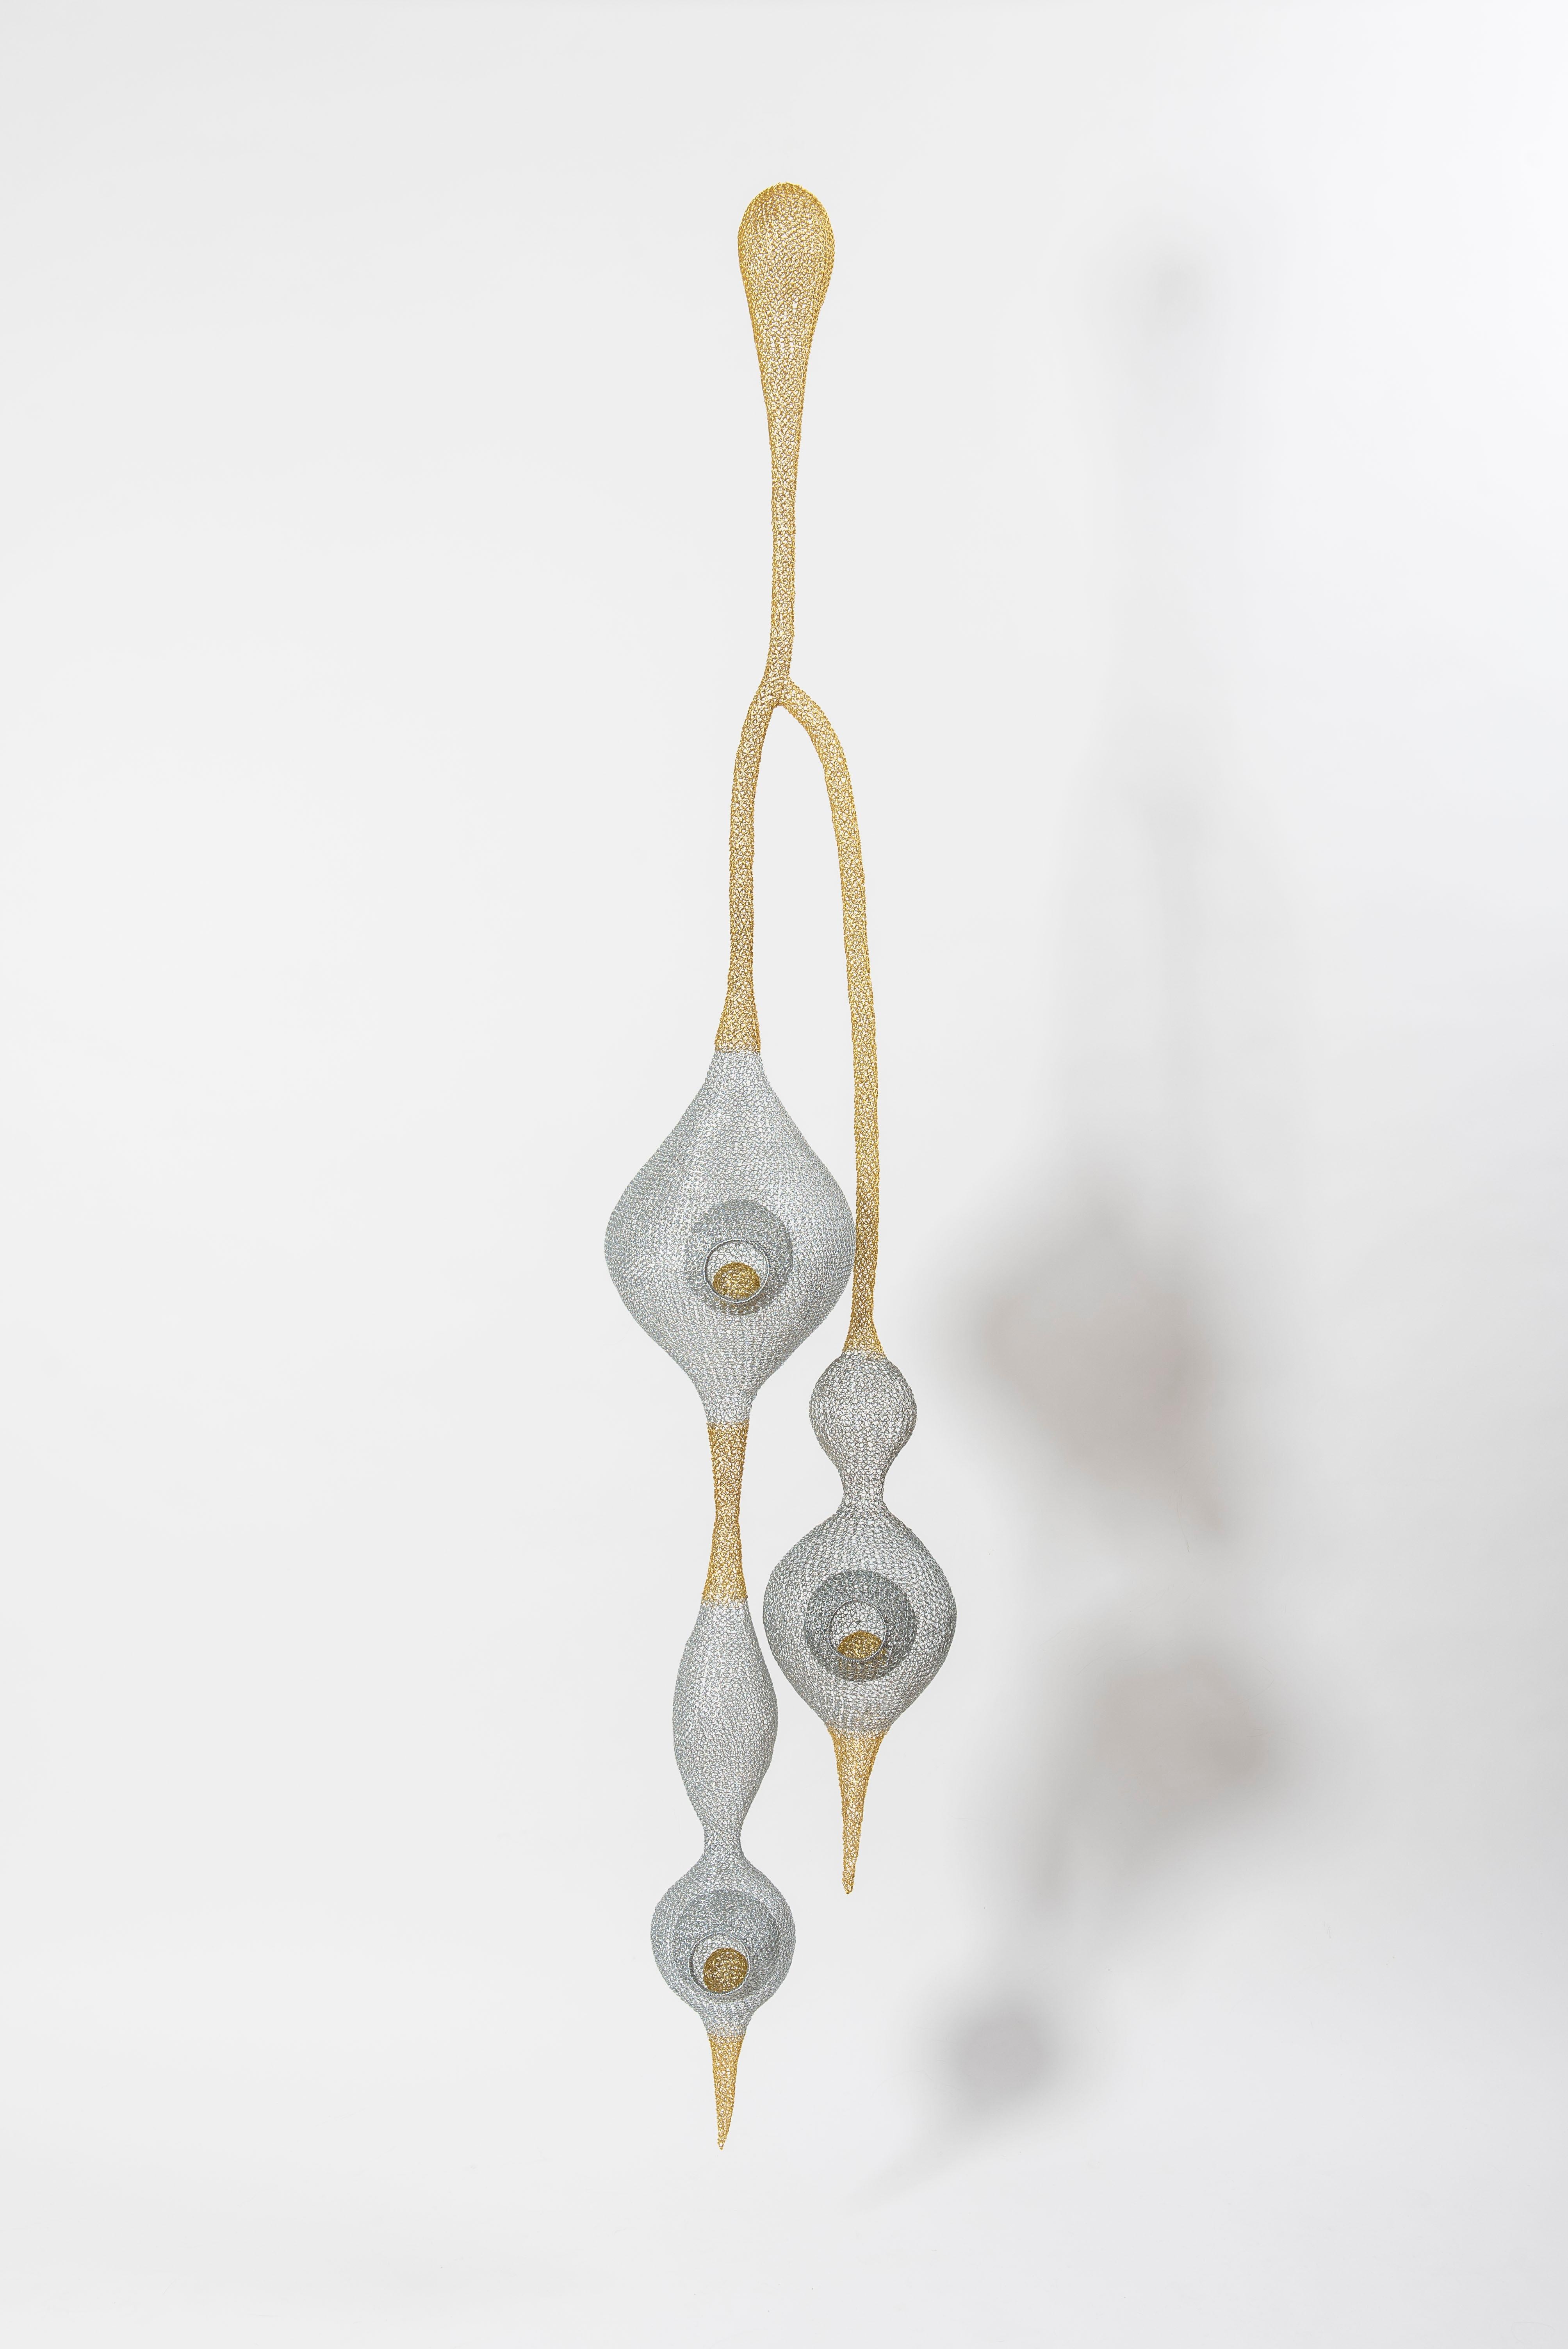 Delphine Grandvaux Abstract Sculpture – "Obéole", handgestrickter, luftiger, transparenter Anhänger, gold-grau-metallische Skulptur